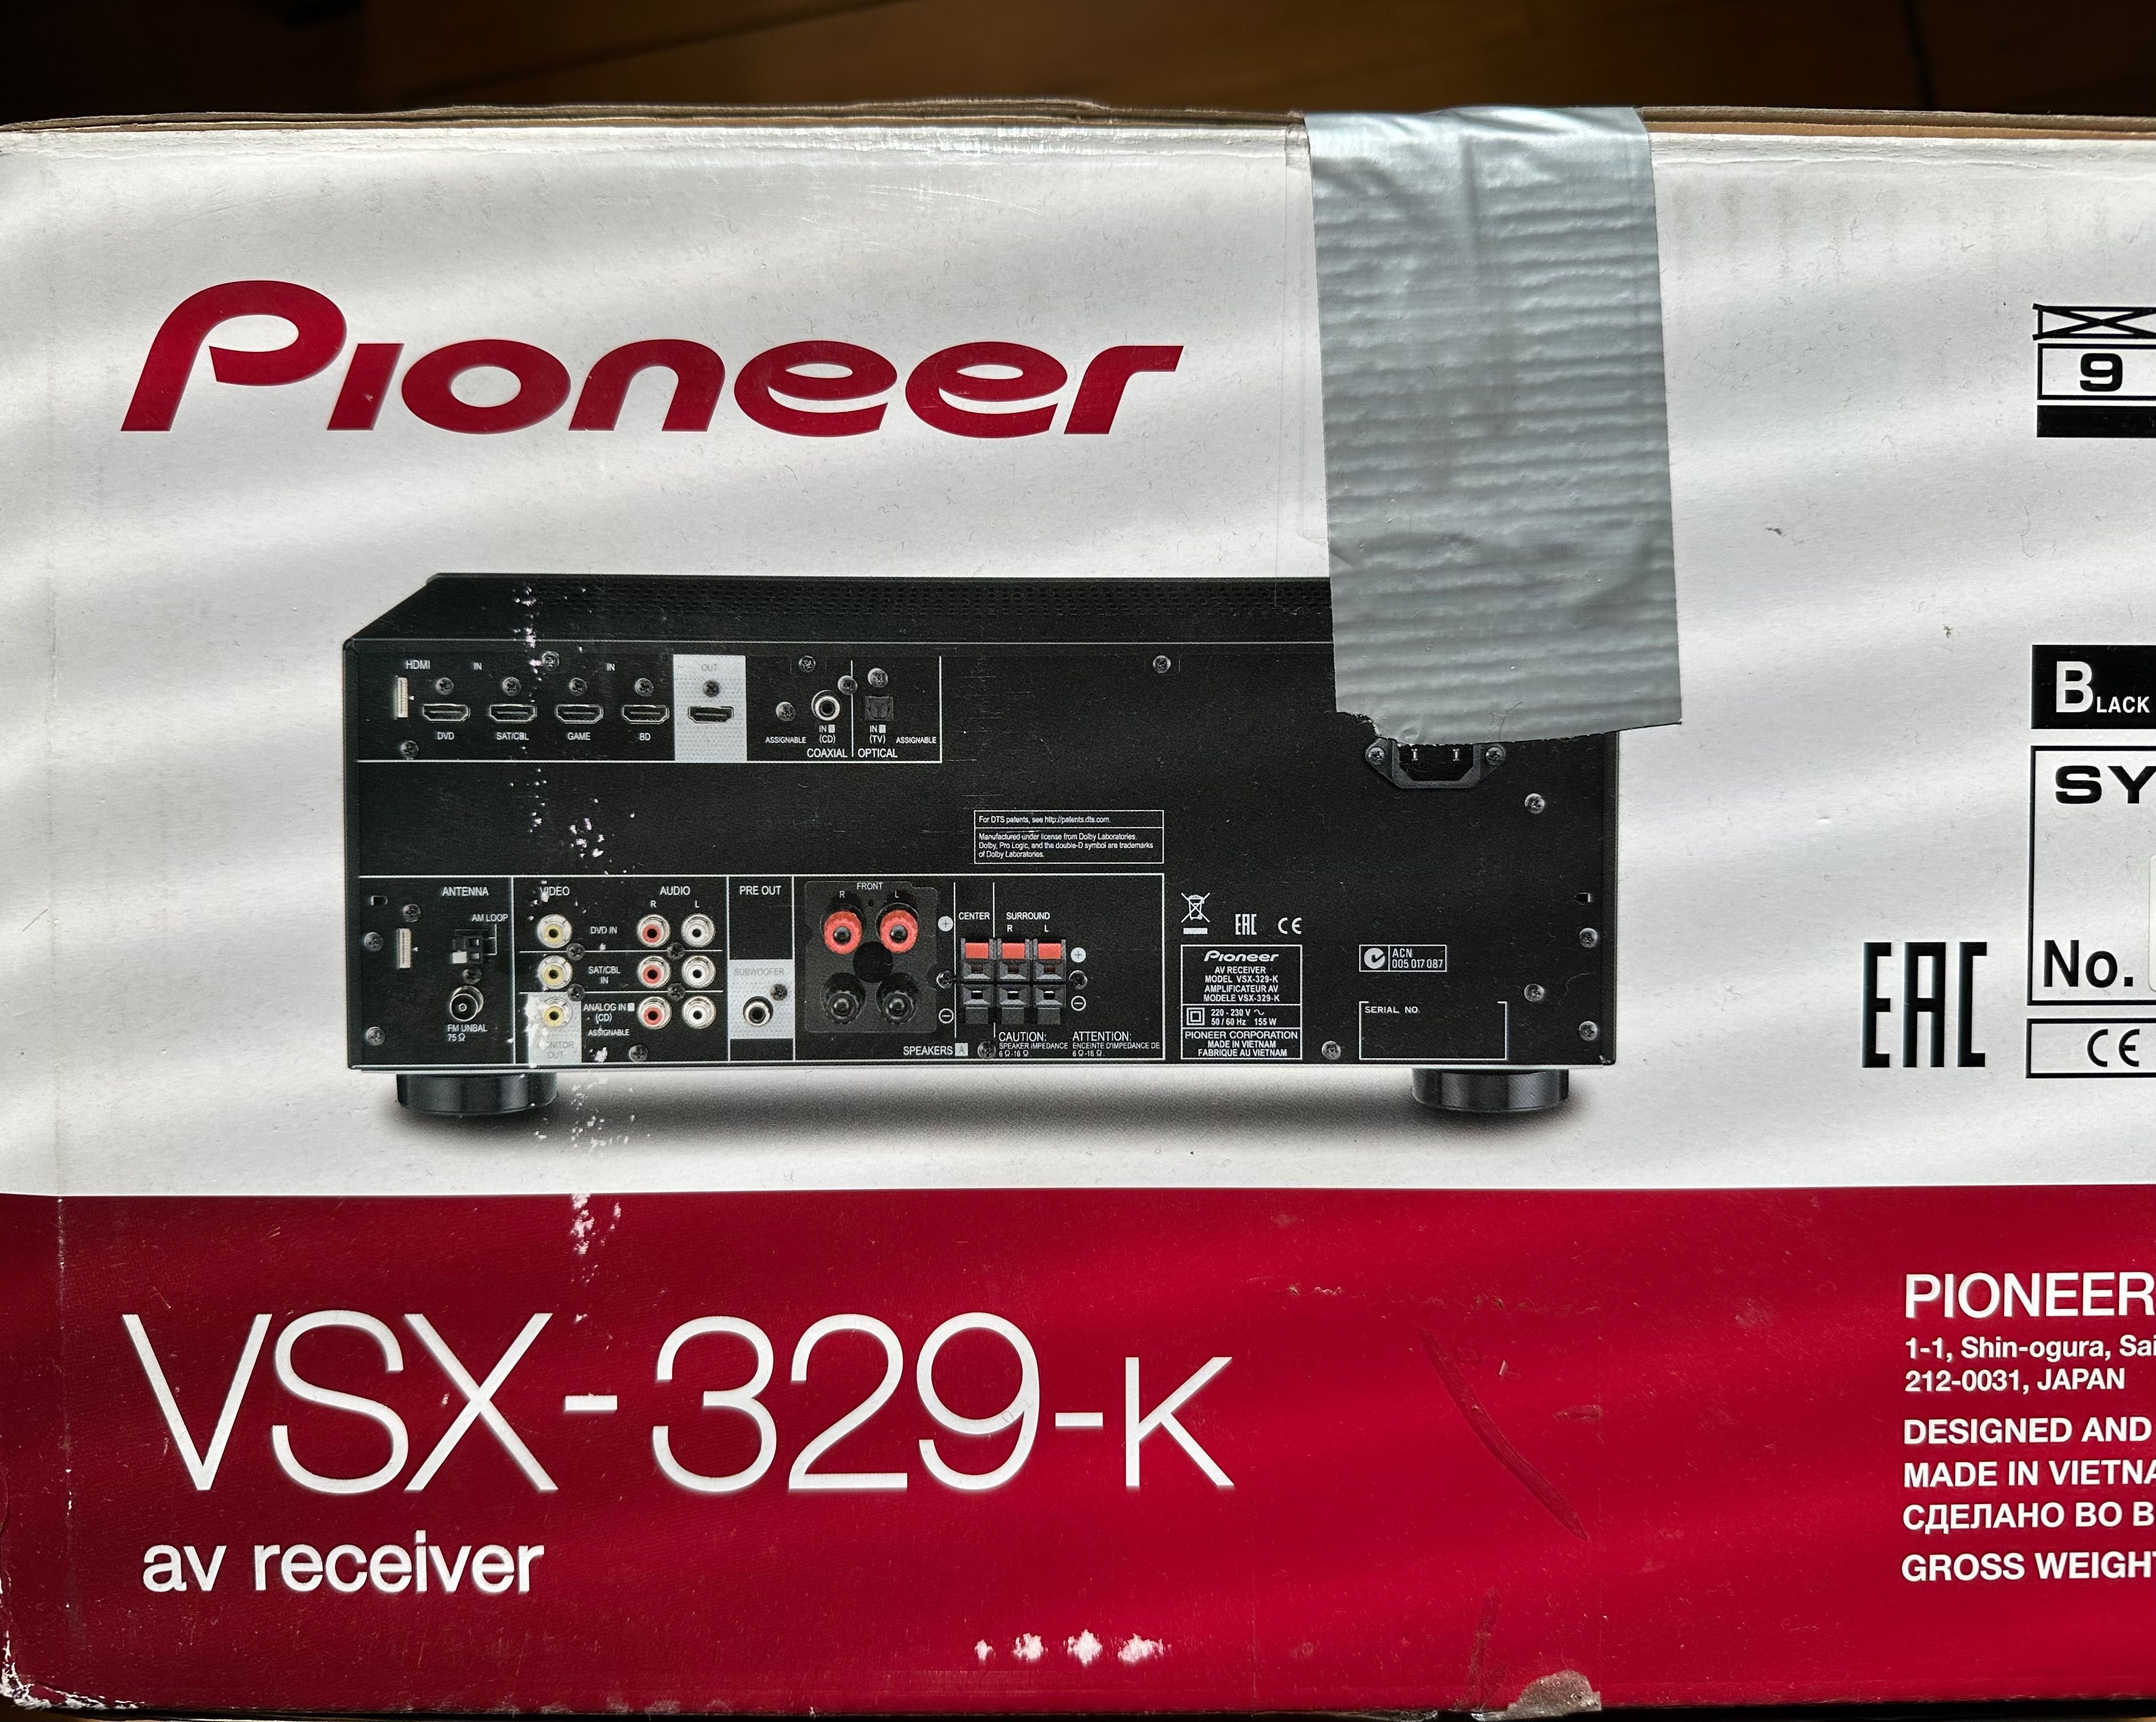 Pioneer VSX-329-K receiver